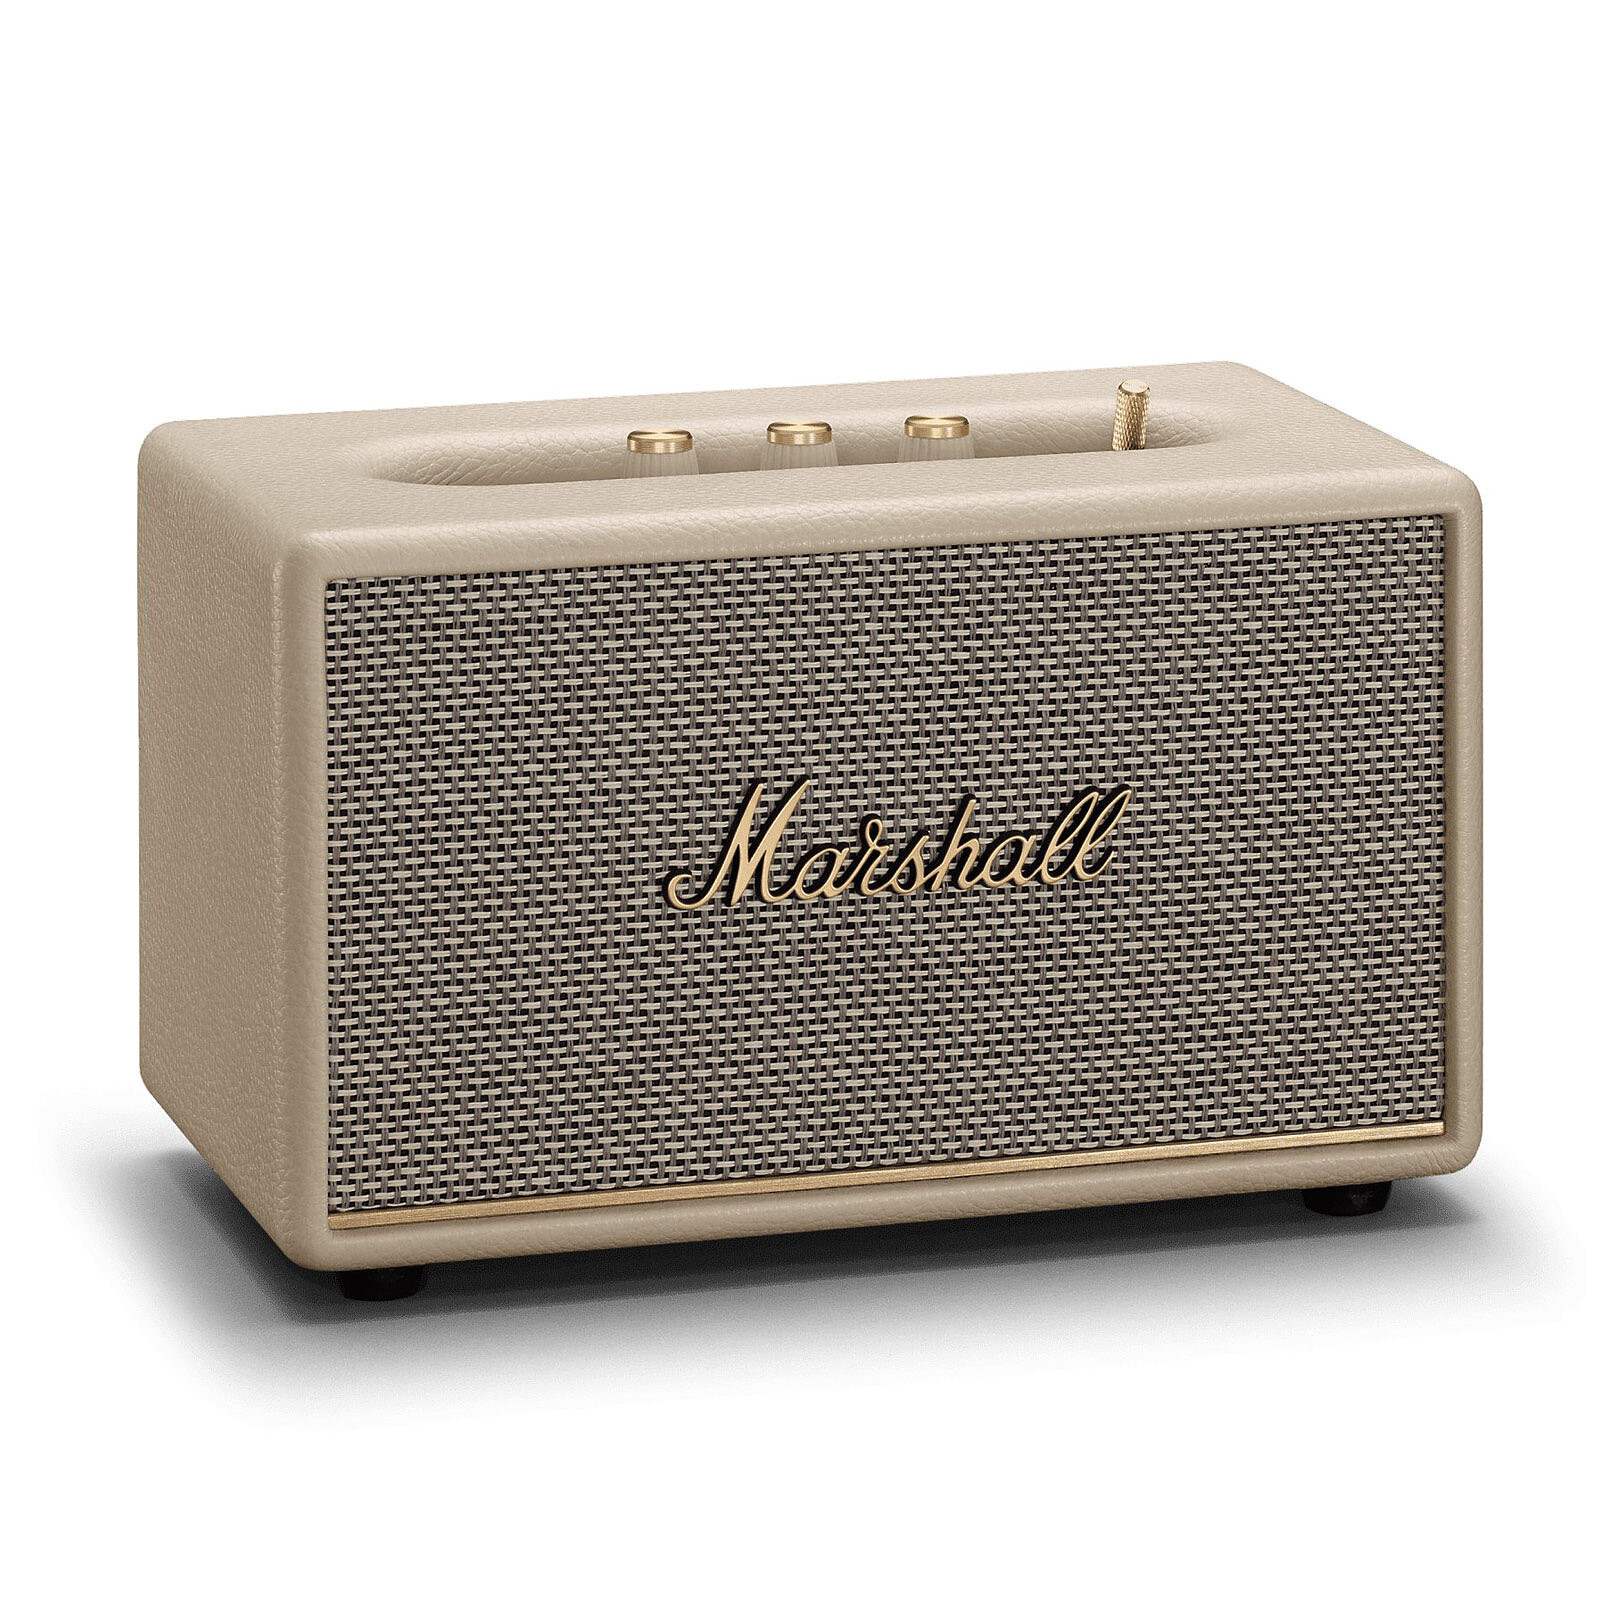 Bluetooth speaker 3-year Acton LDLC warranty III - Cream - Marshall